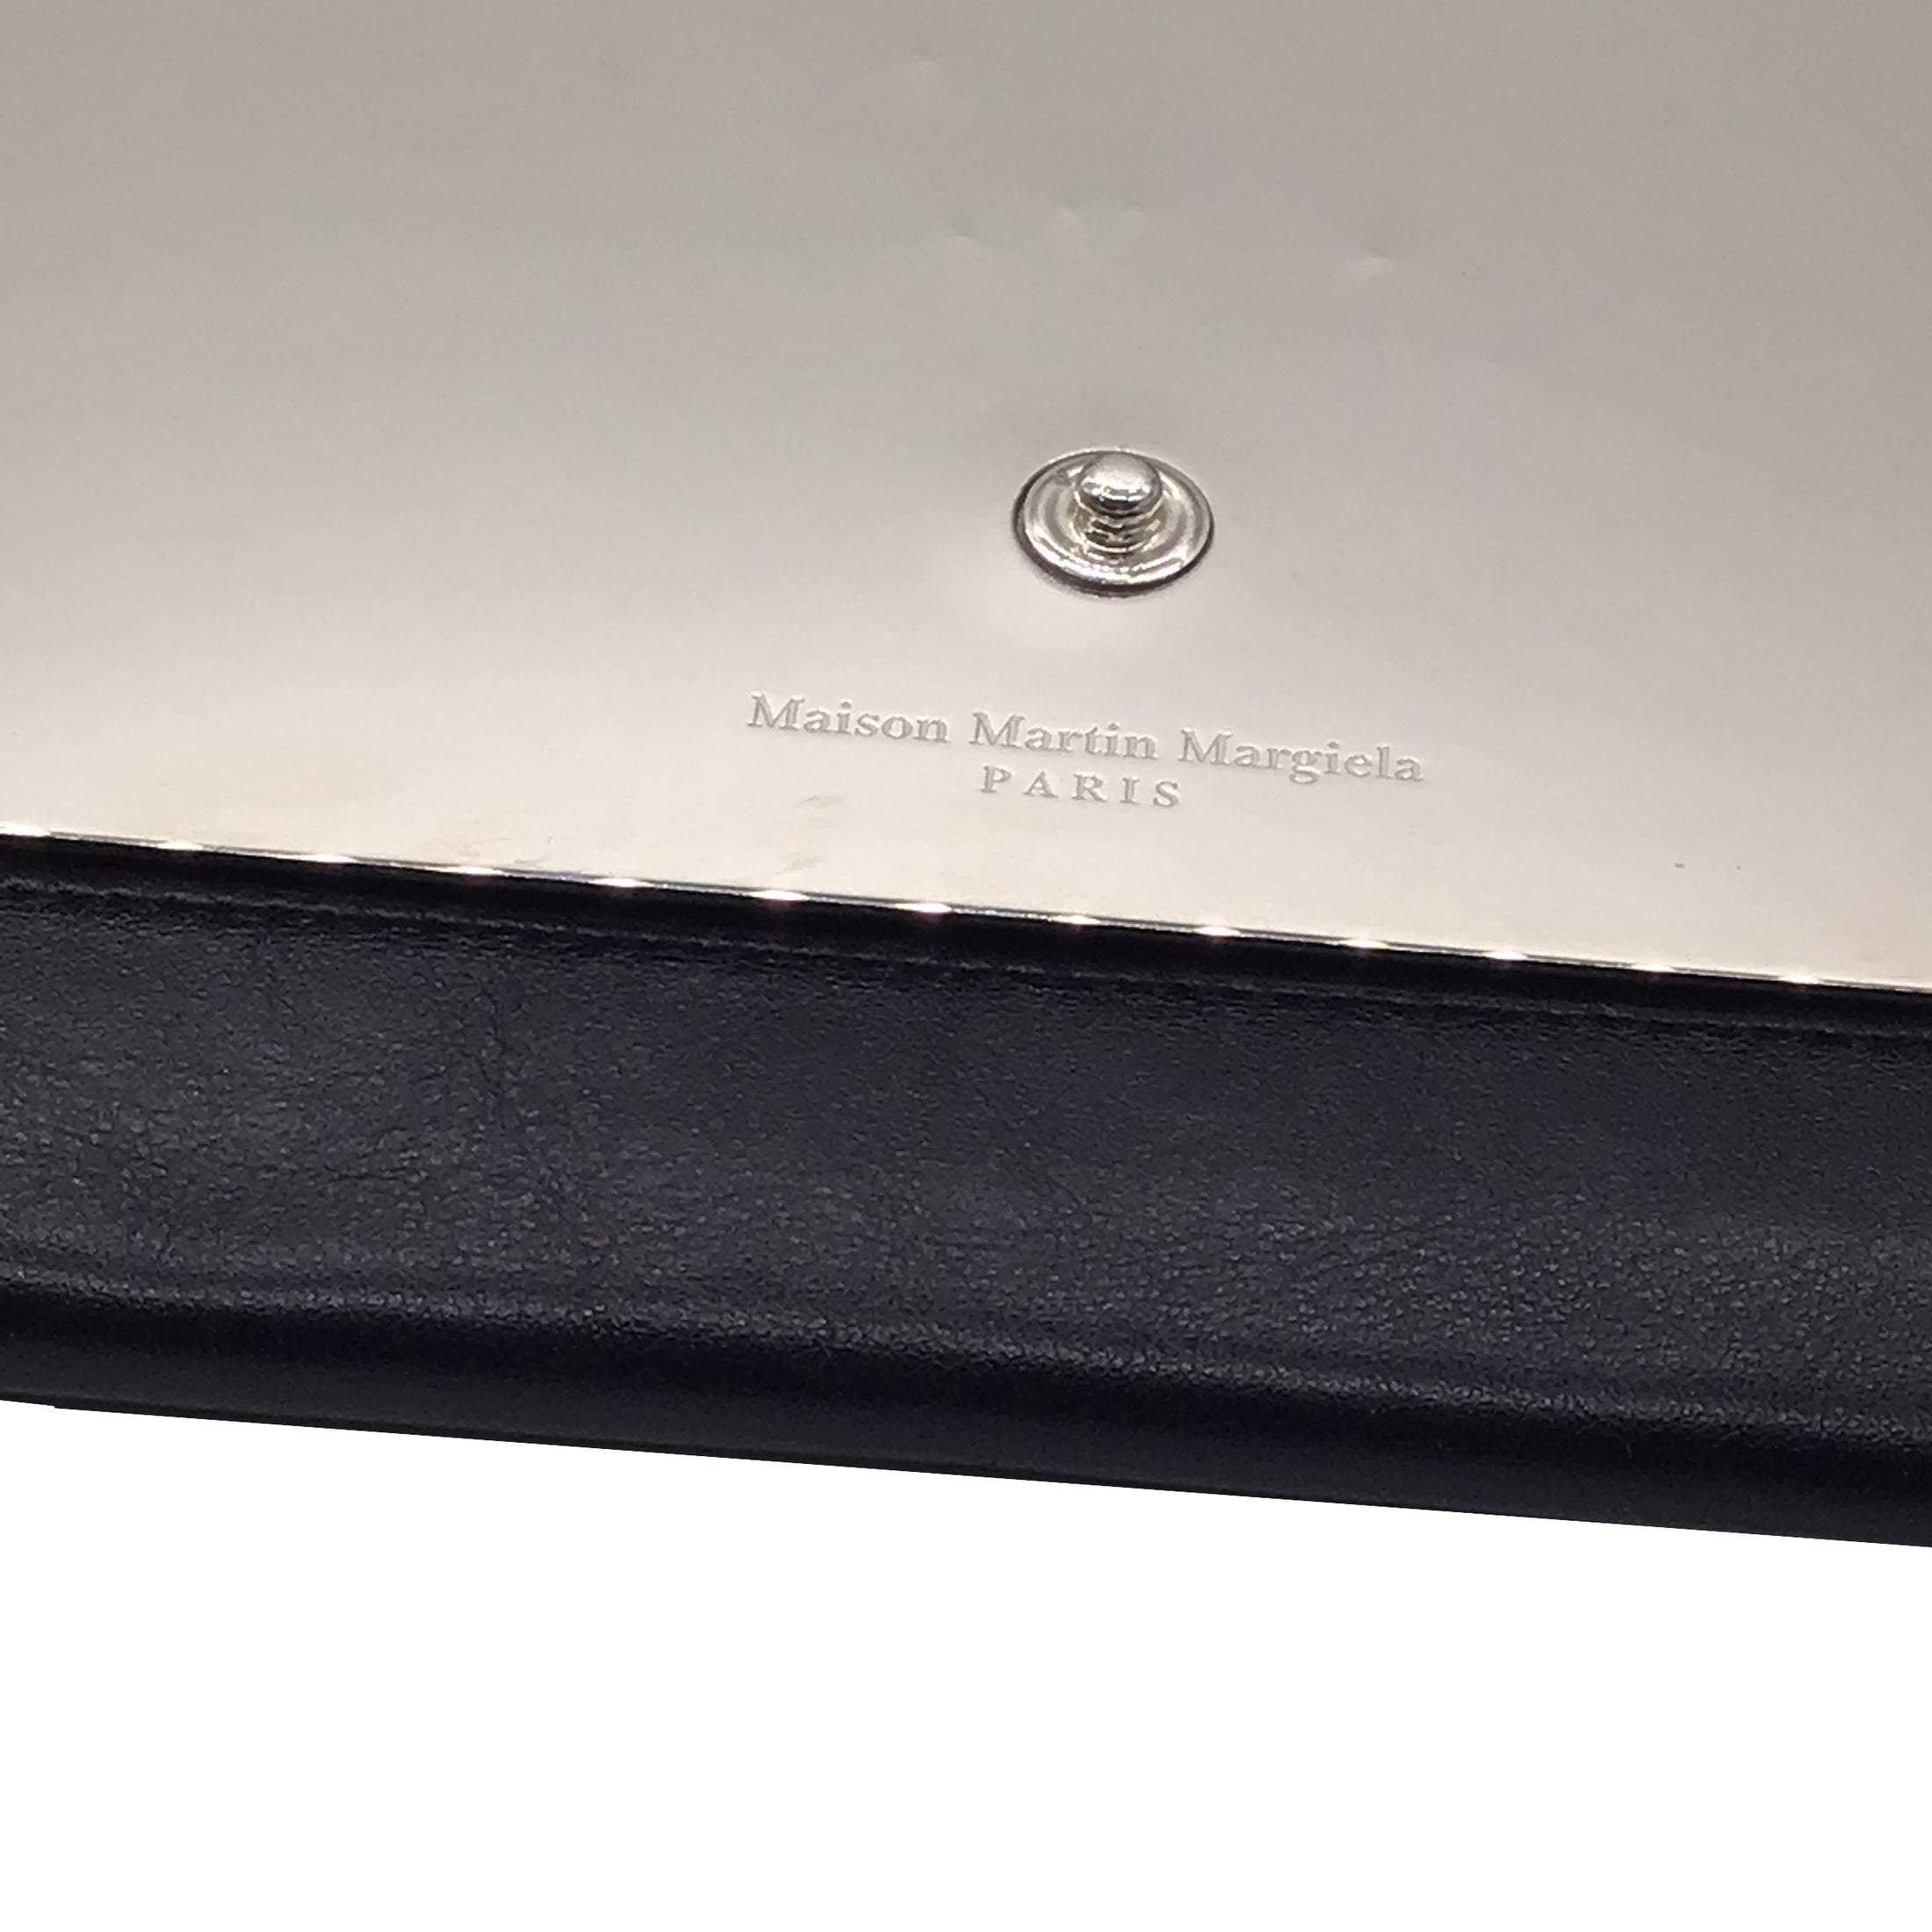 Maison Martin Margiela Black / Silver Mirrored Detail Leather Wallet